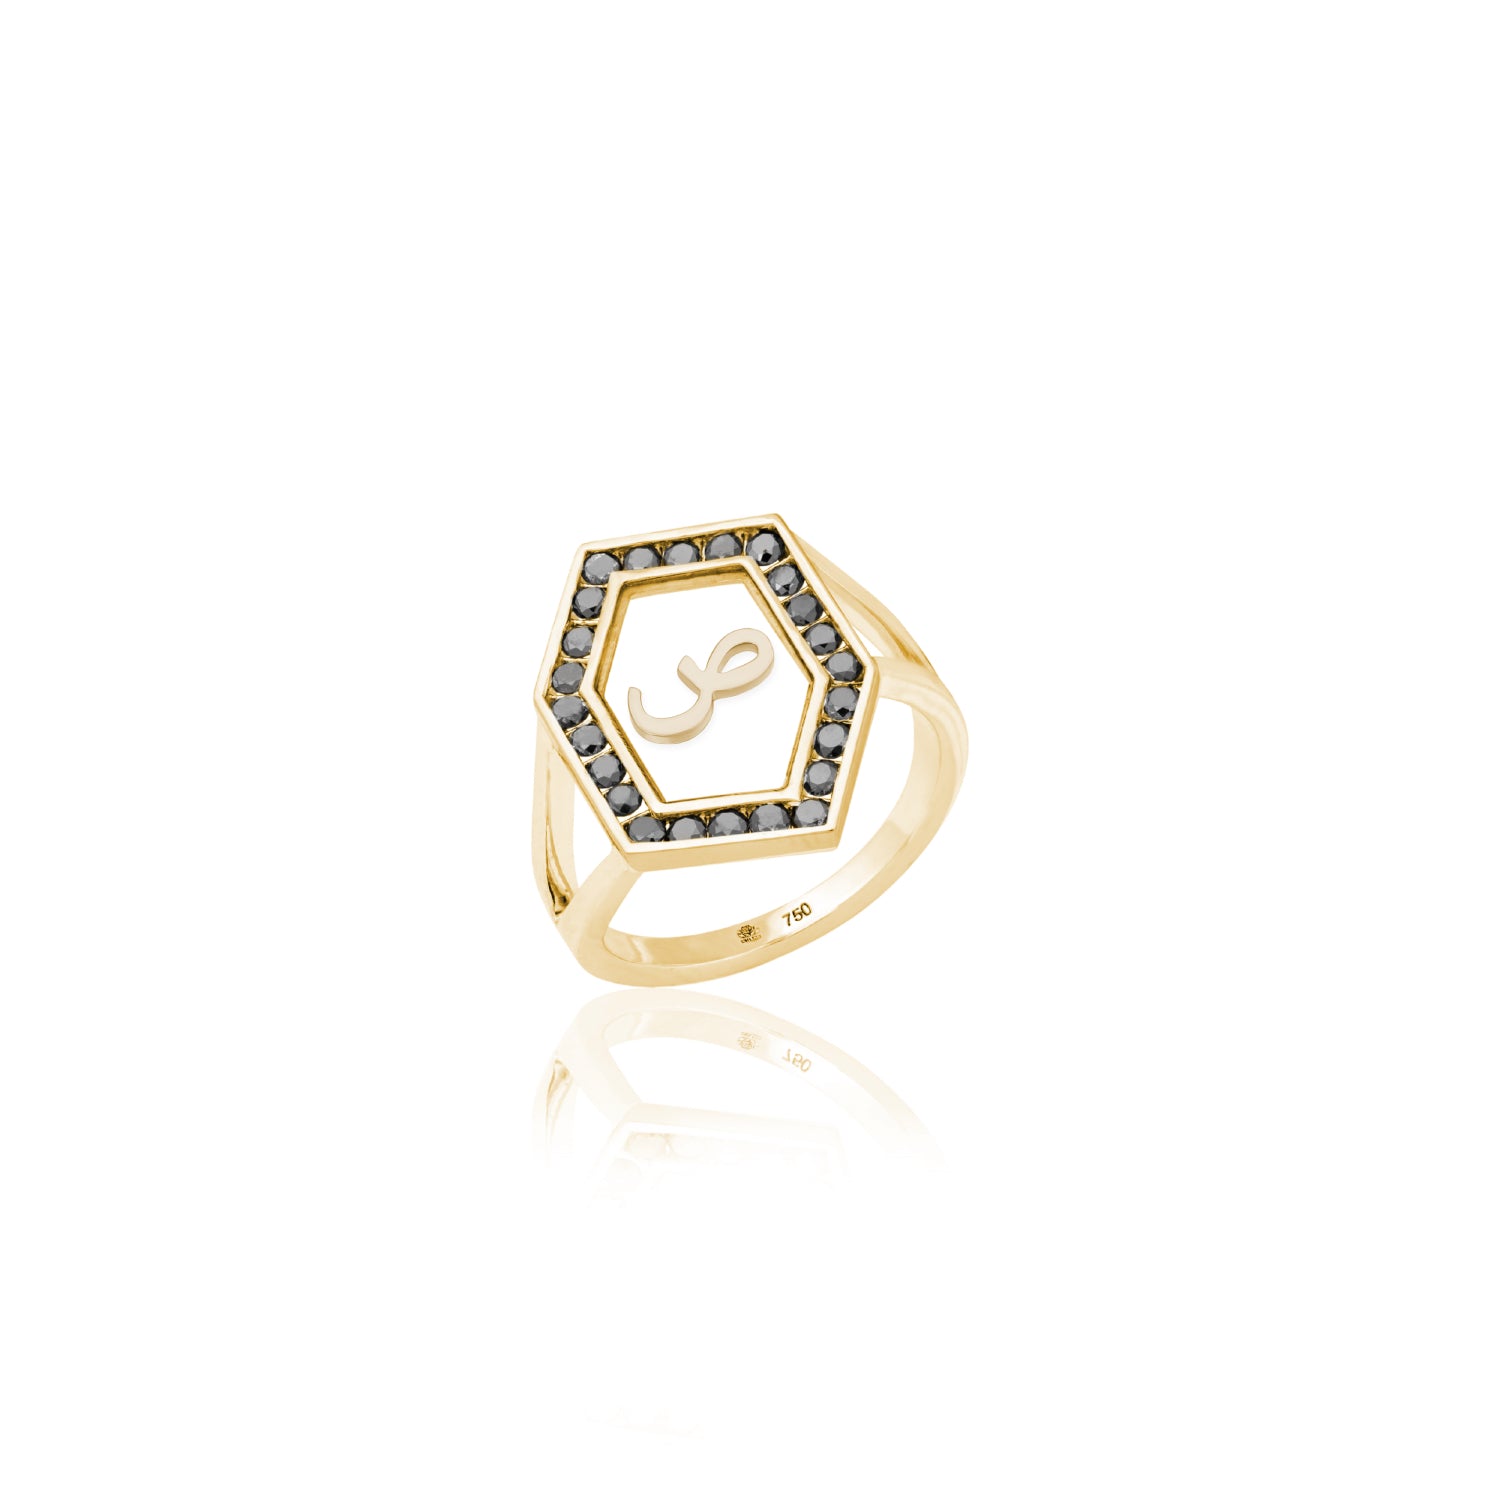 Qamoos 1.0 Letter ص Black Diamond Ring in Yellow Gold